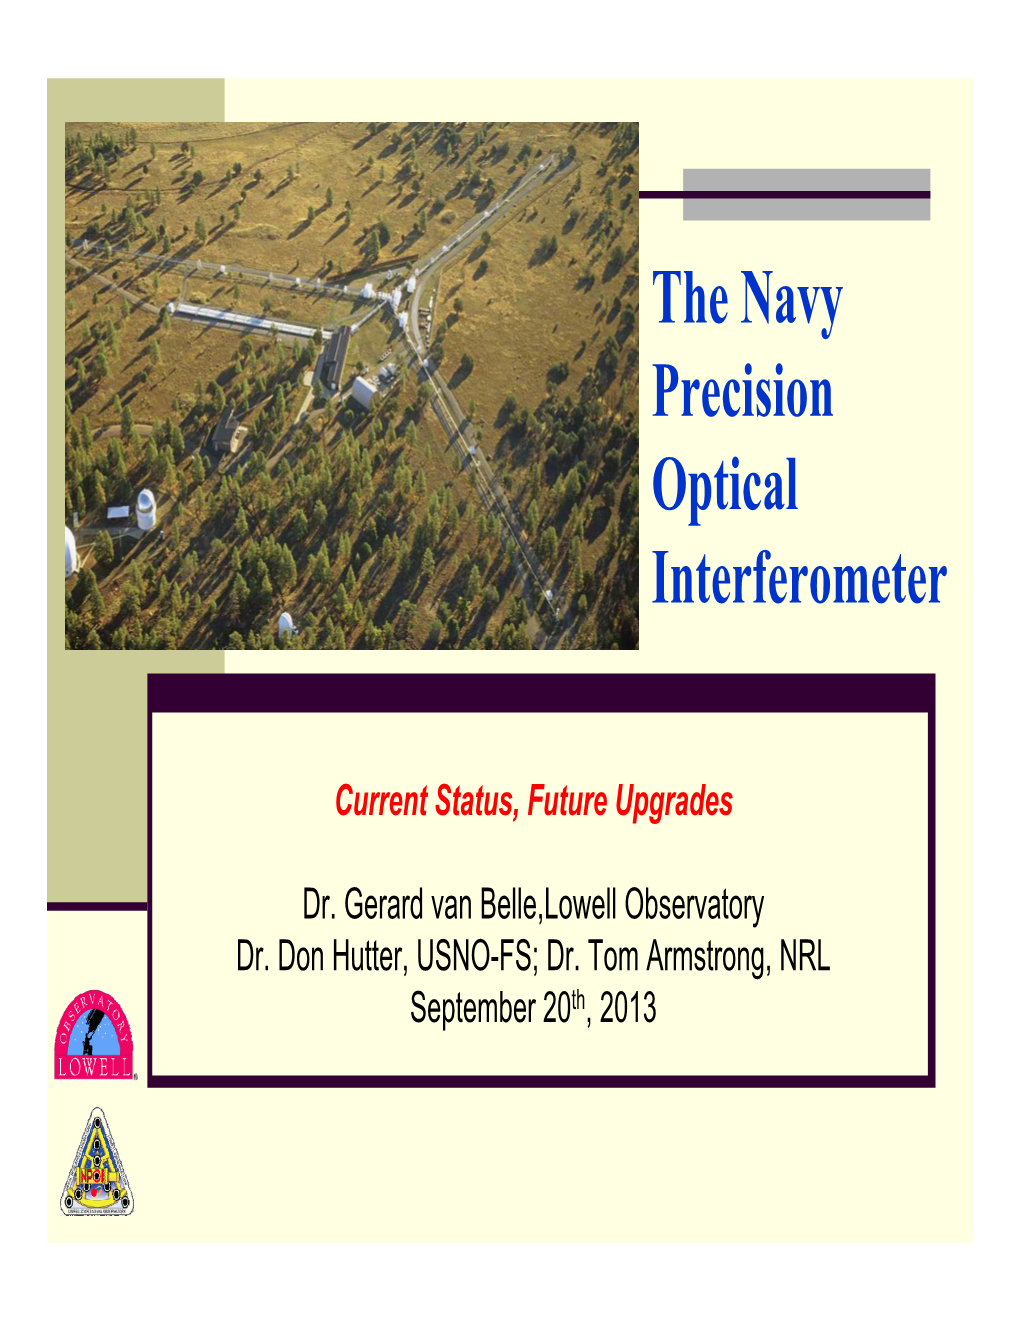 The Navy Precision Optical Interferometer